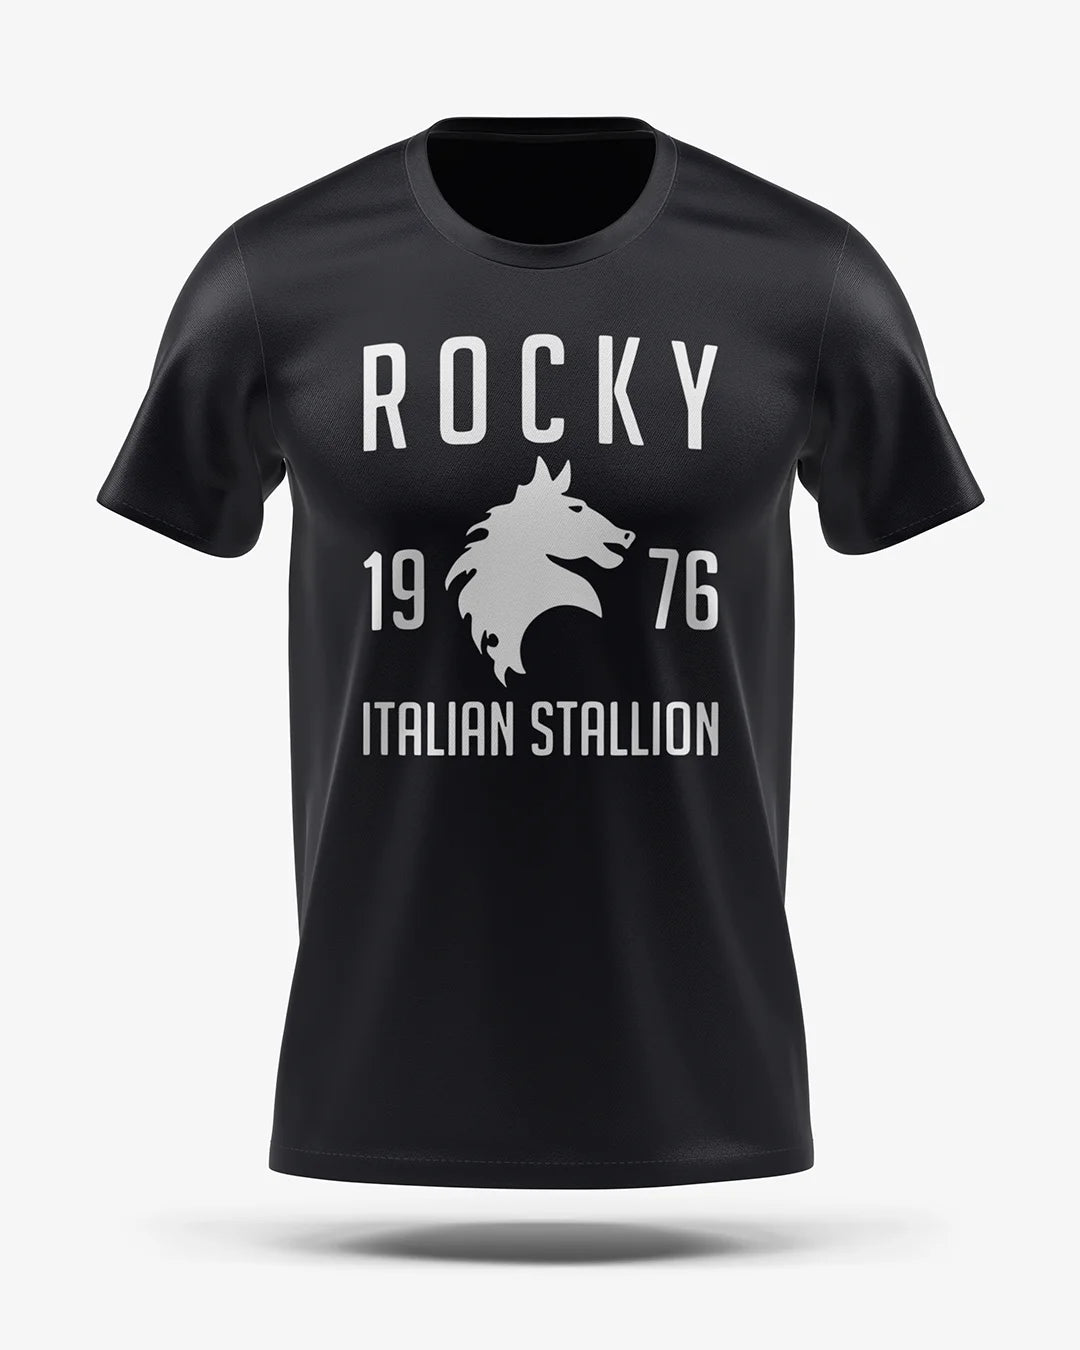 Camiseta Esporte Dry Fit - Rocky 1976 Italian Stallion